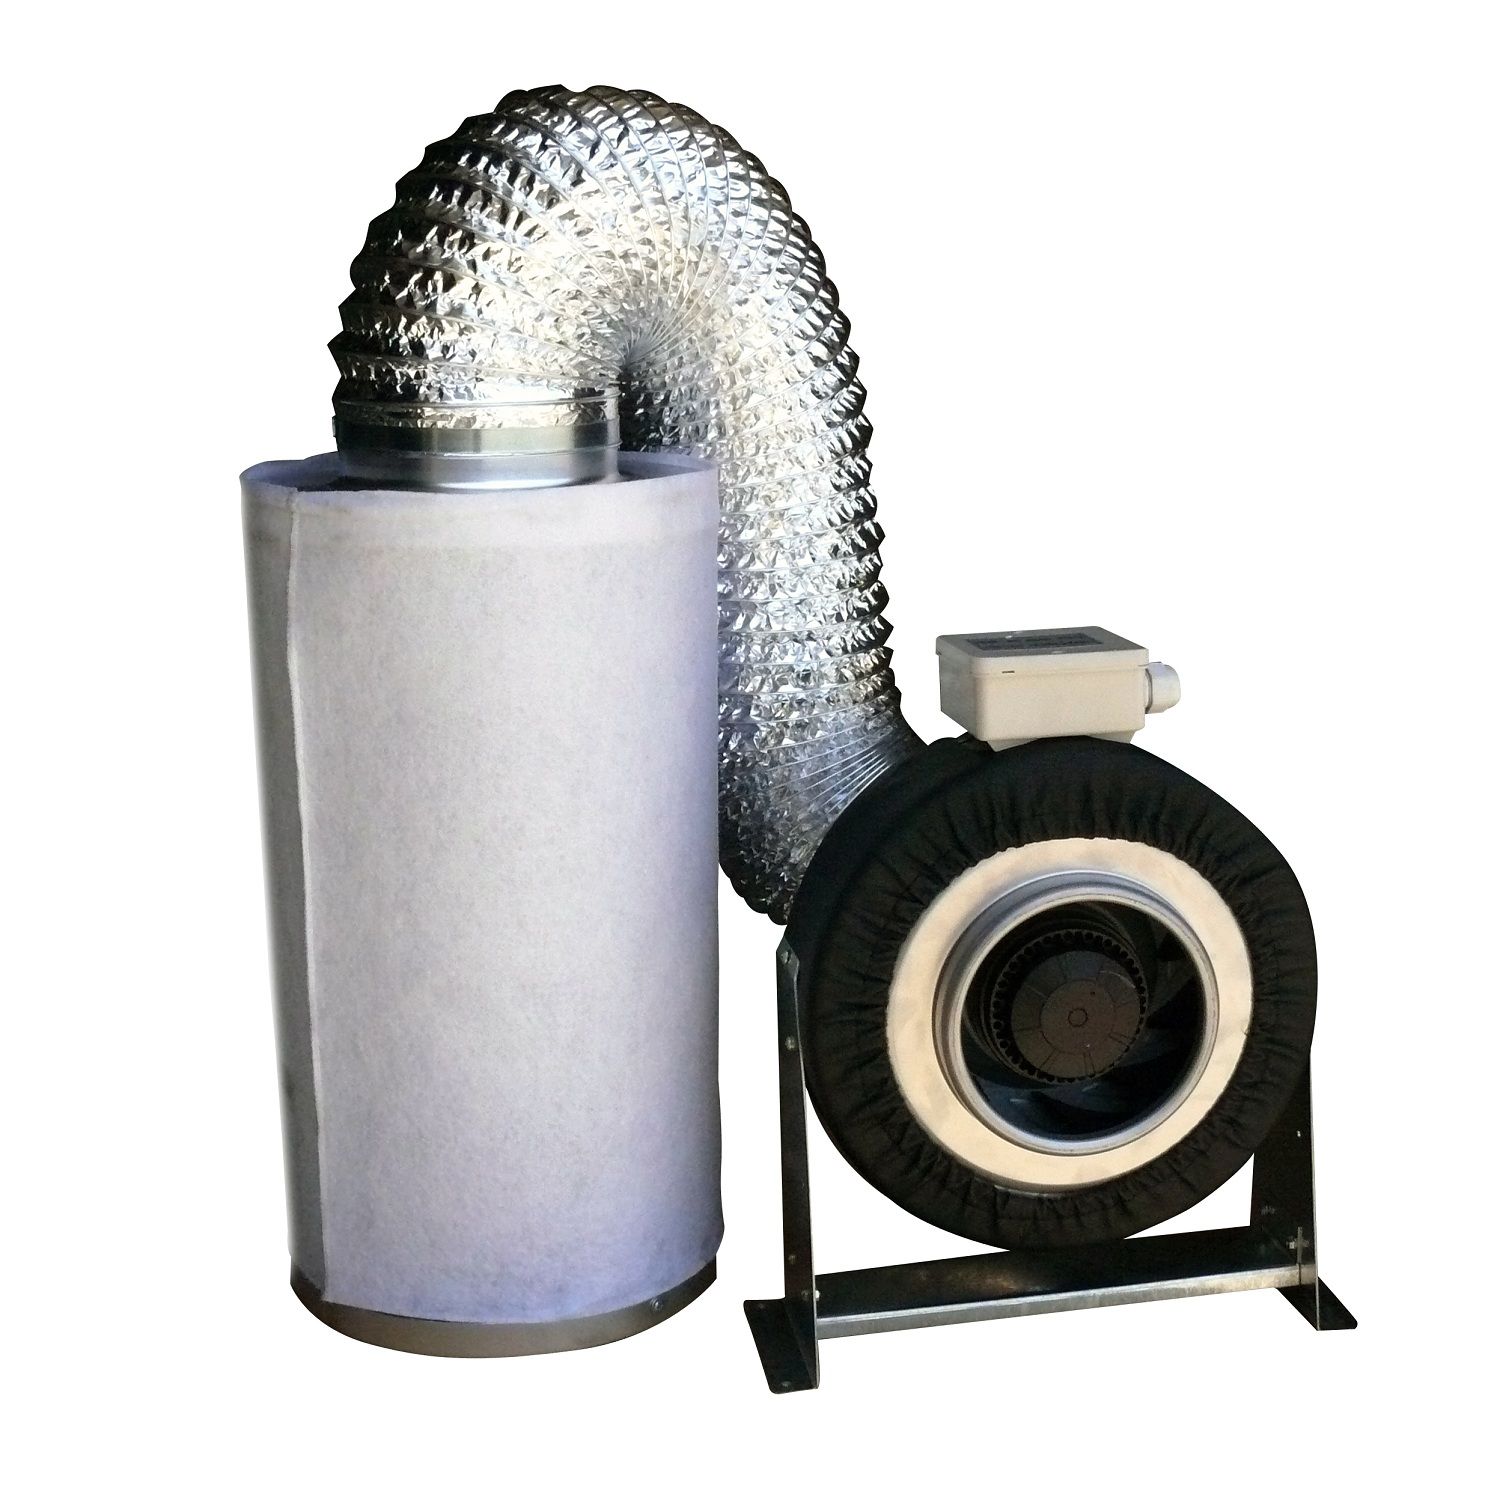  Duct Blower Exhaust Fan Carbon Filter Kit 500 CFM Combo B